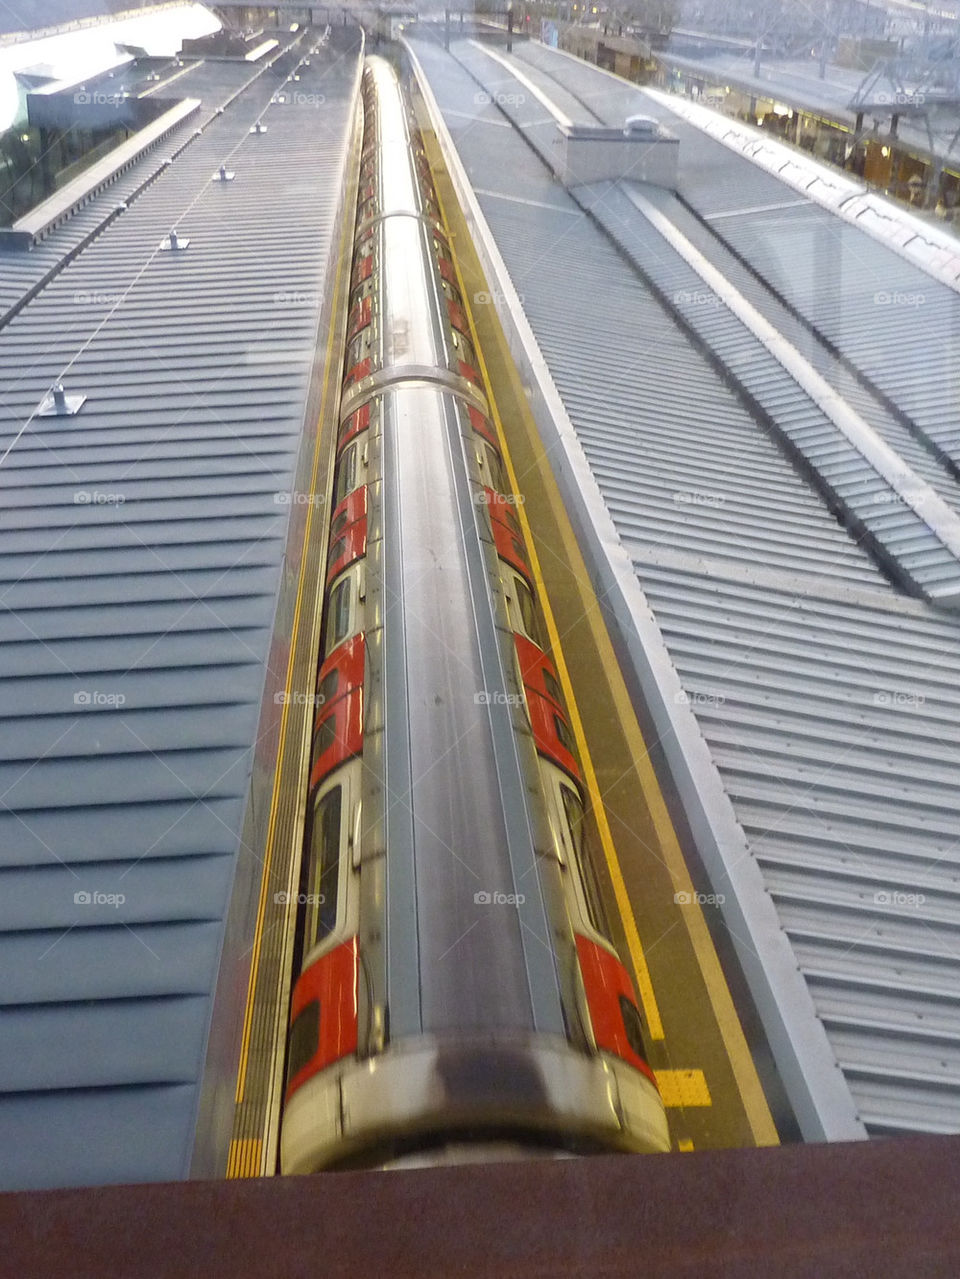 london train roof station by lizajones